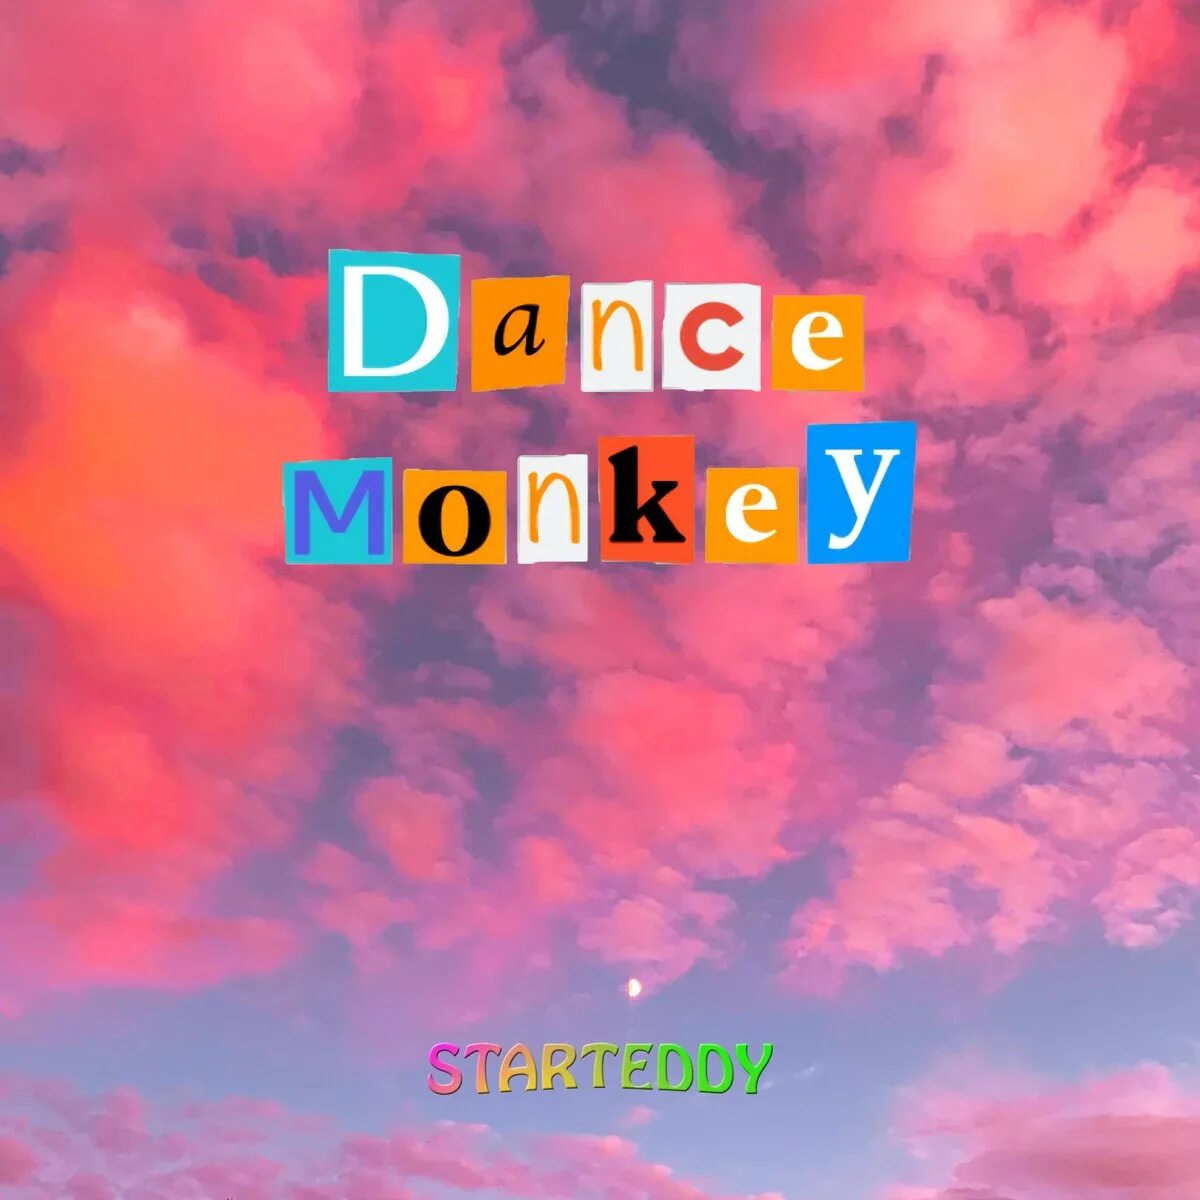 Monkey iphone remix. Iphone Remix Monkey. Dance Monkey iphone Ringtone. Dance Monkey iphone Remix Ringon site рингтон.